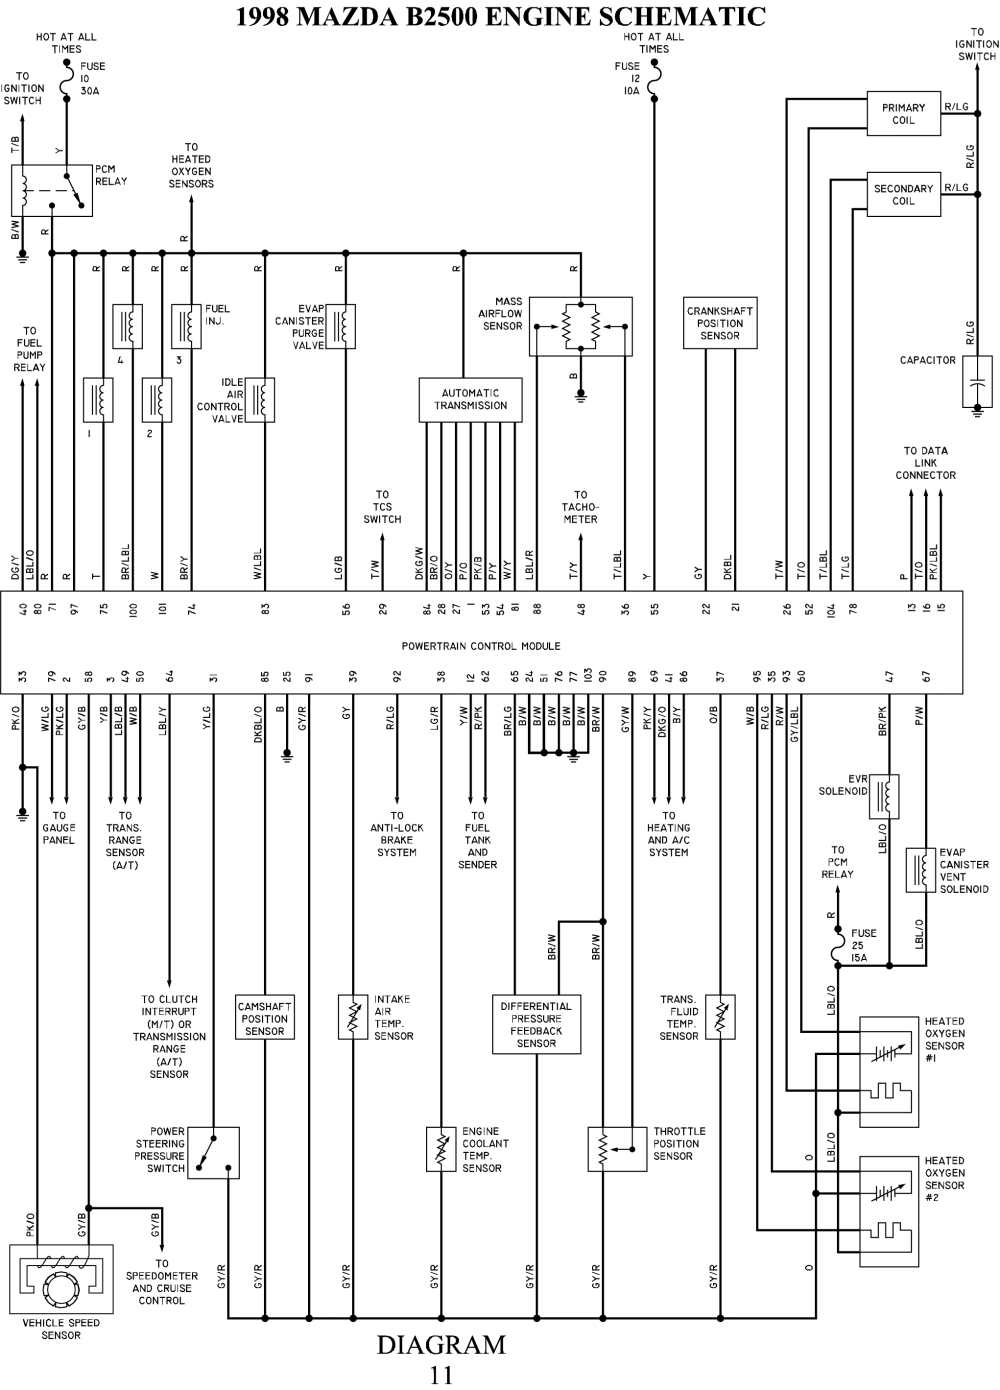 1999 Mazda B2500 Fuse Box Diagram - Wiring Diagram Schemas